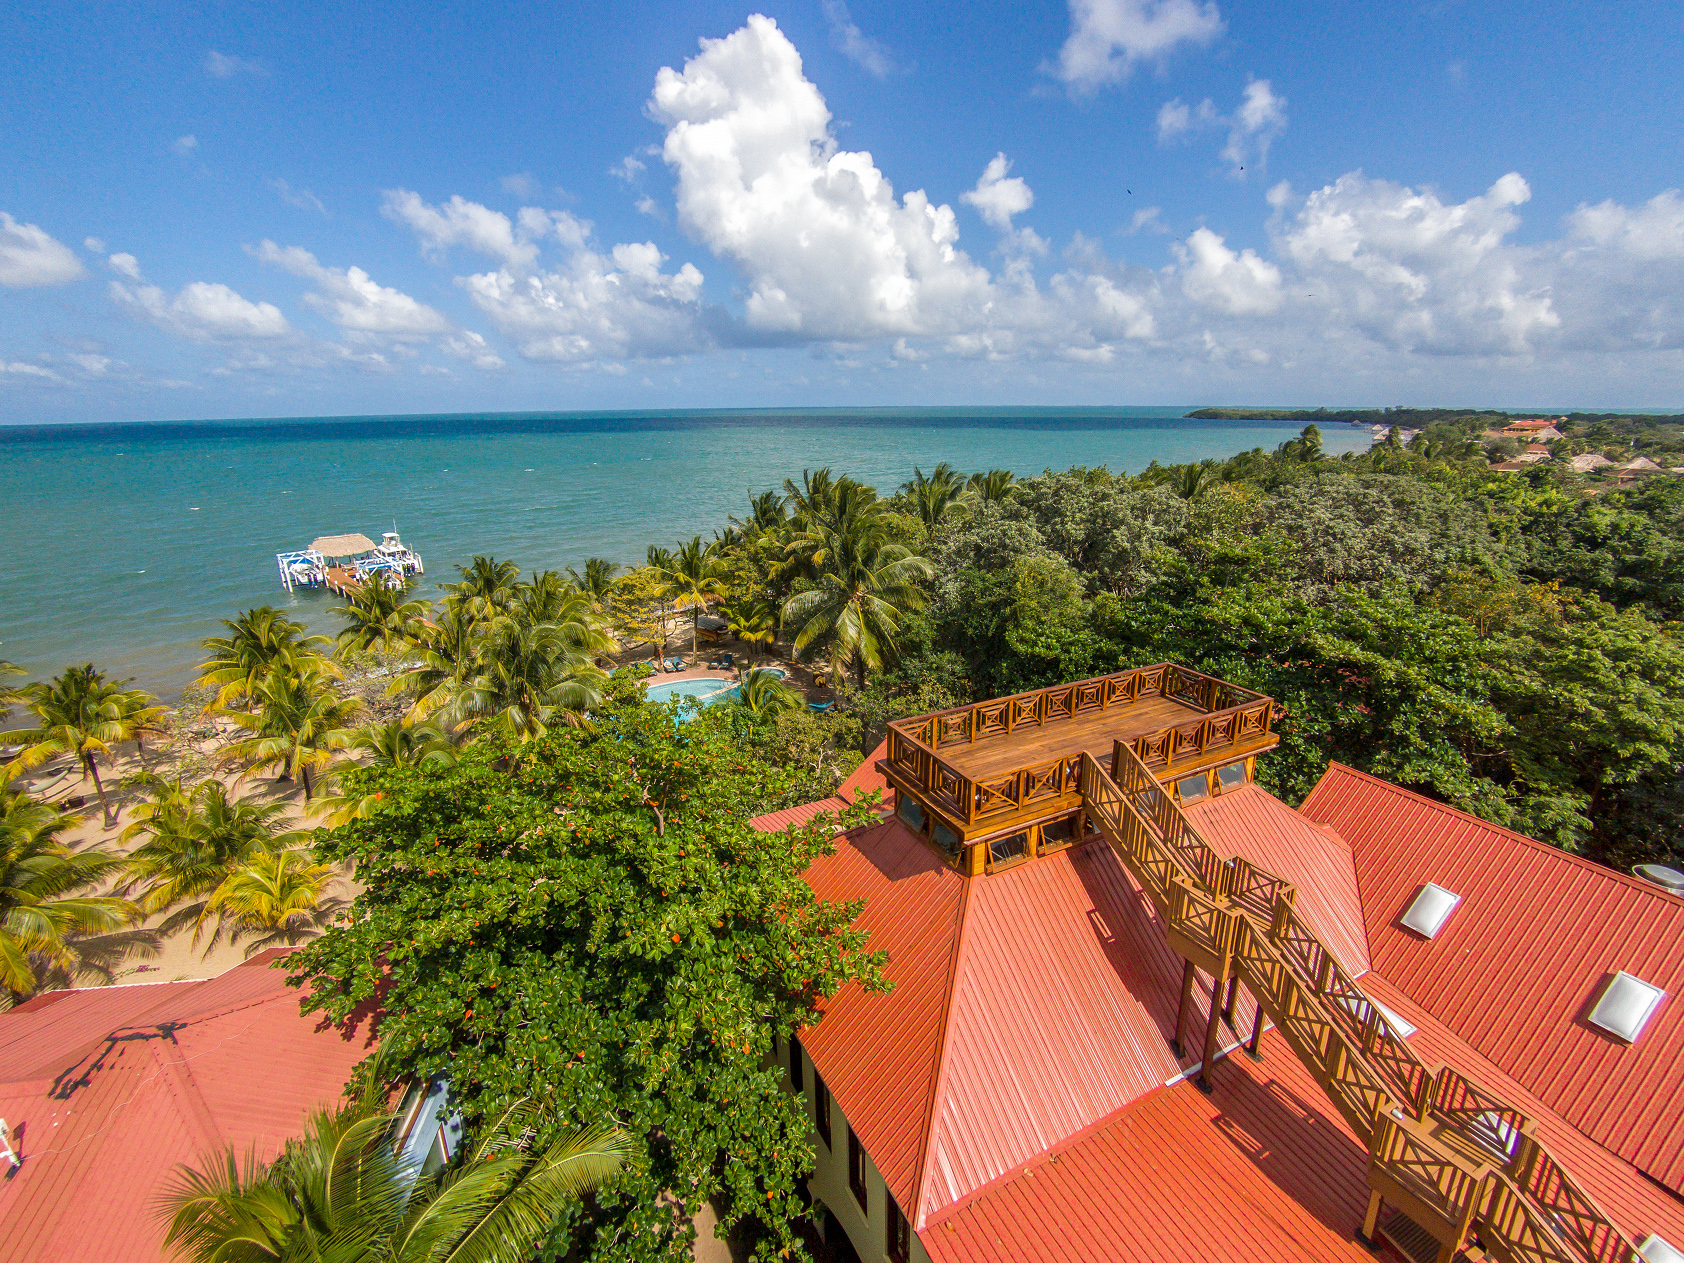 Hamanasi Resort Celebrates 15 Years as Belize’s Ultimate Adventure Resort